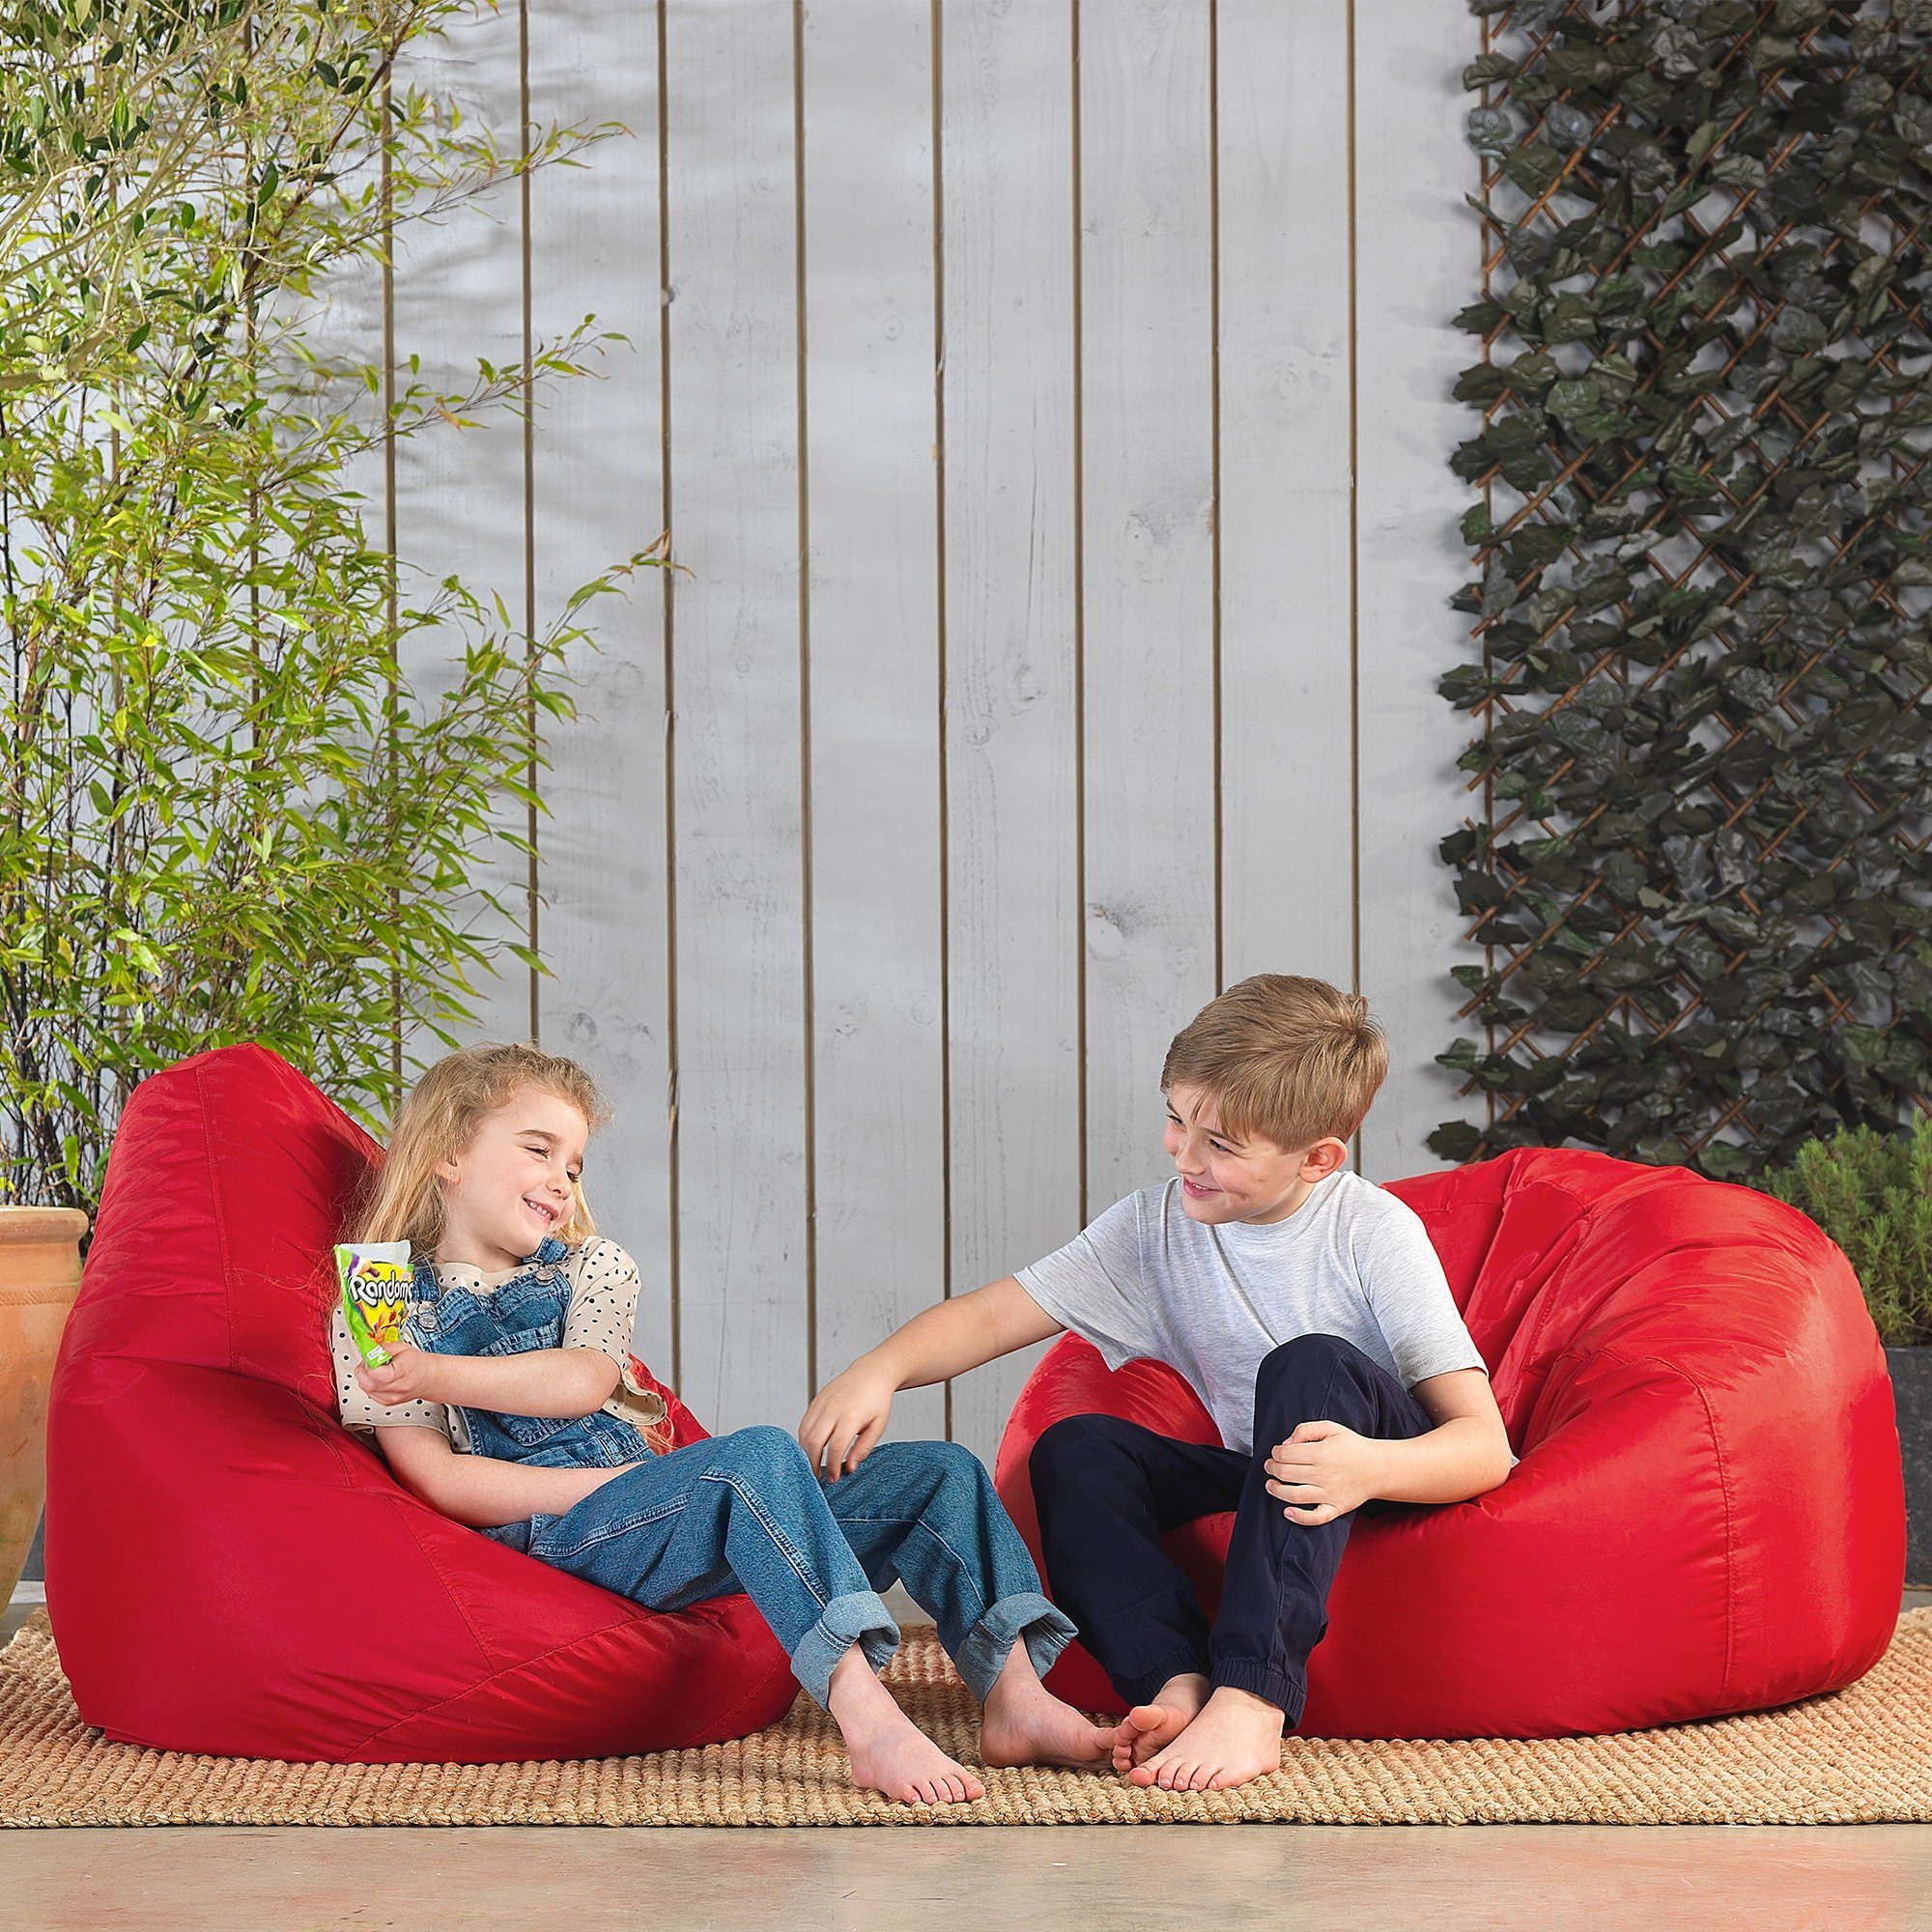 Veeva Sitzsack-Sessel Kinder Outdoor rot Sitzsack für